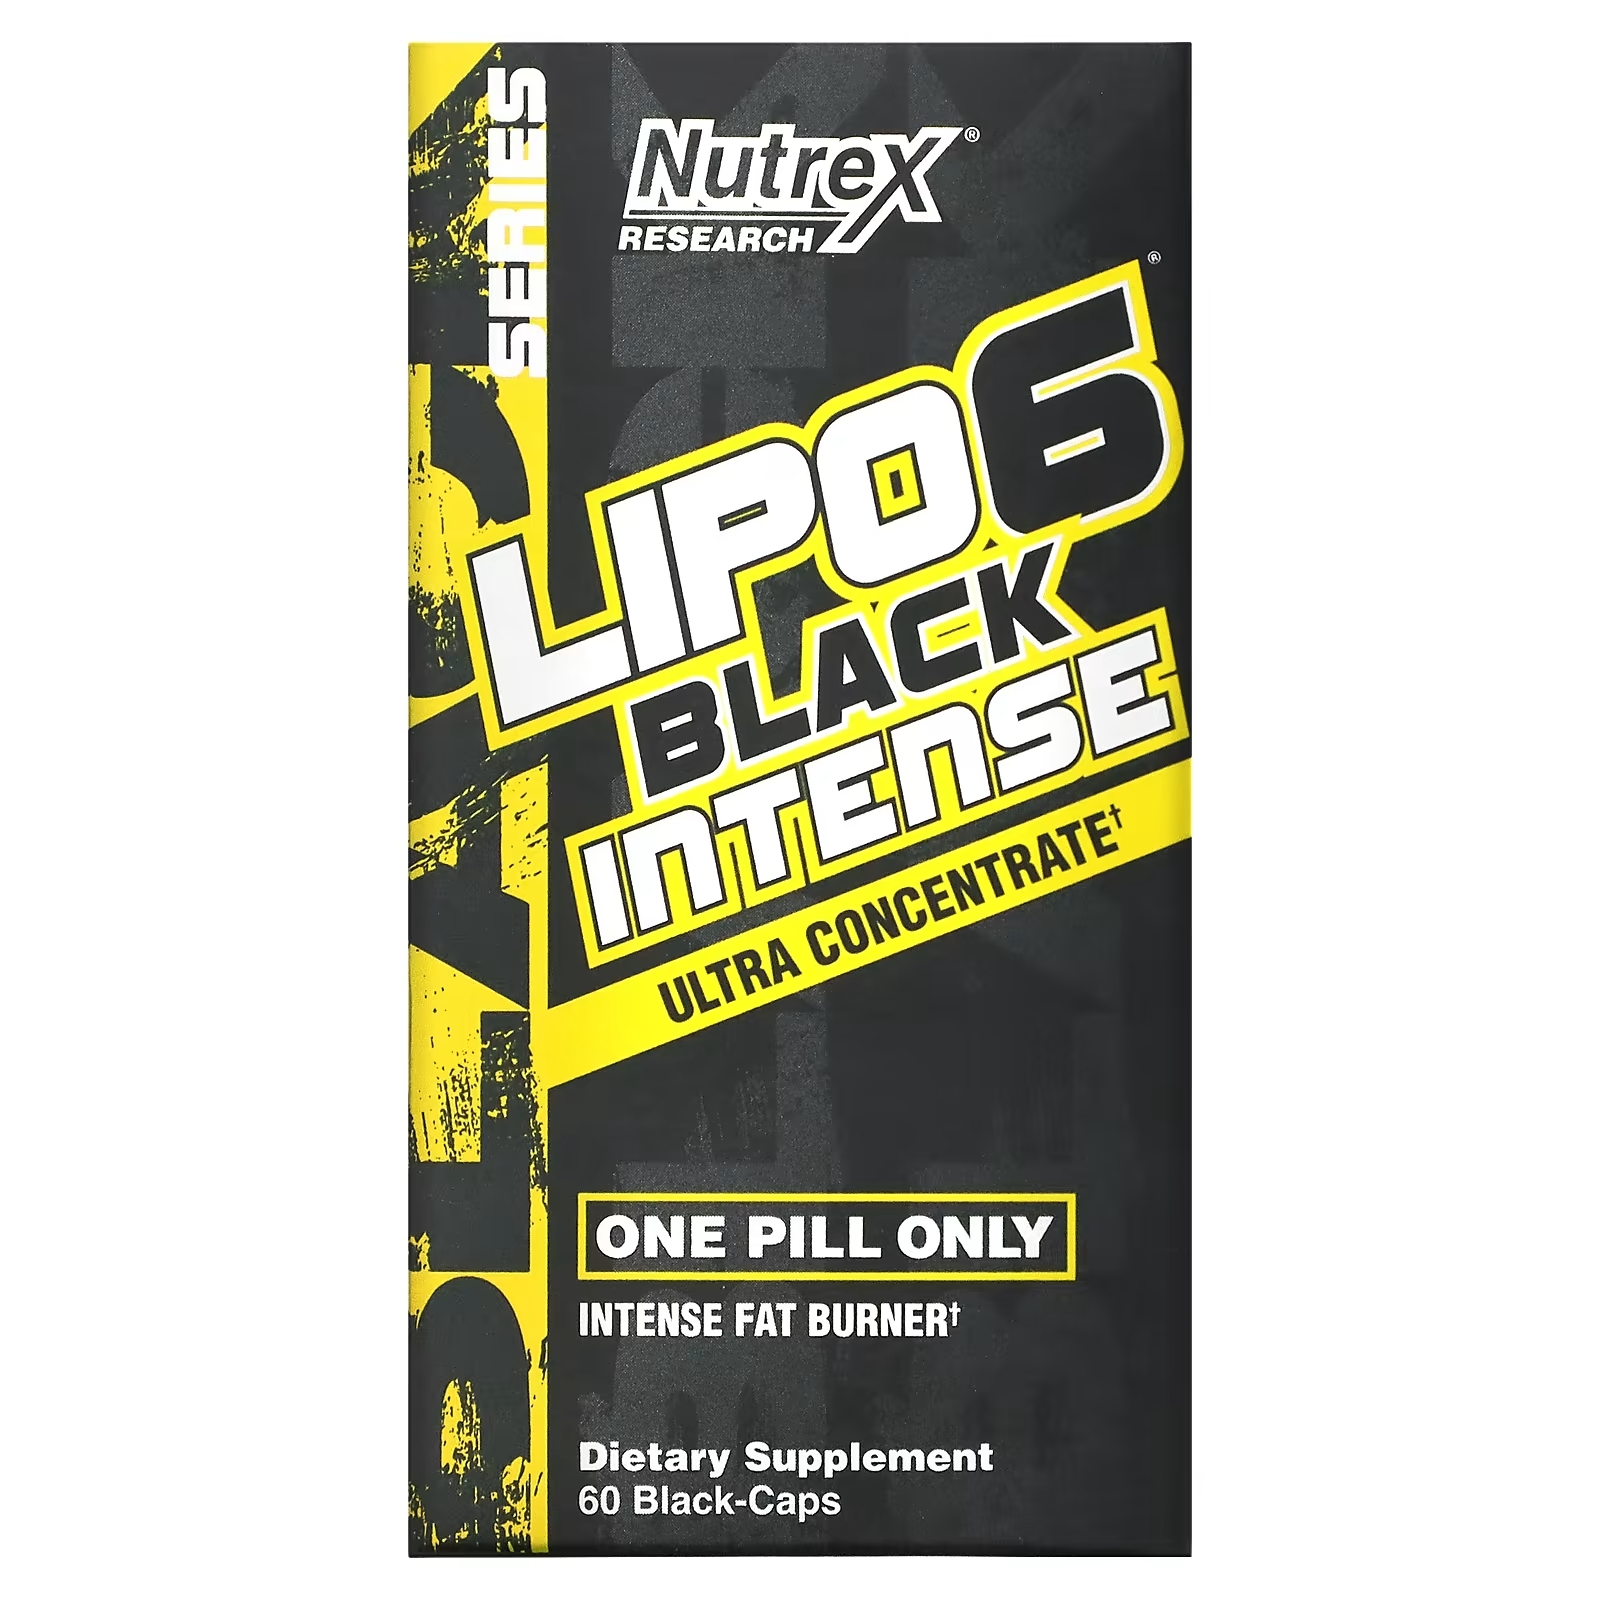 Ультраконцентрат Nutrex Research LIPO-6 Black Intense, 60 капсул фото